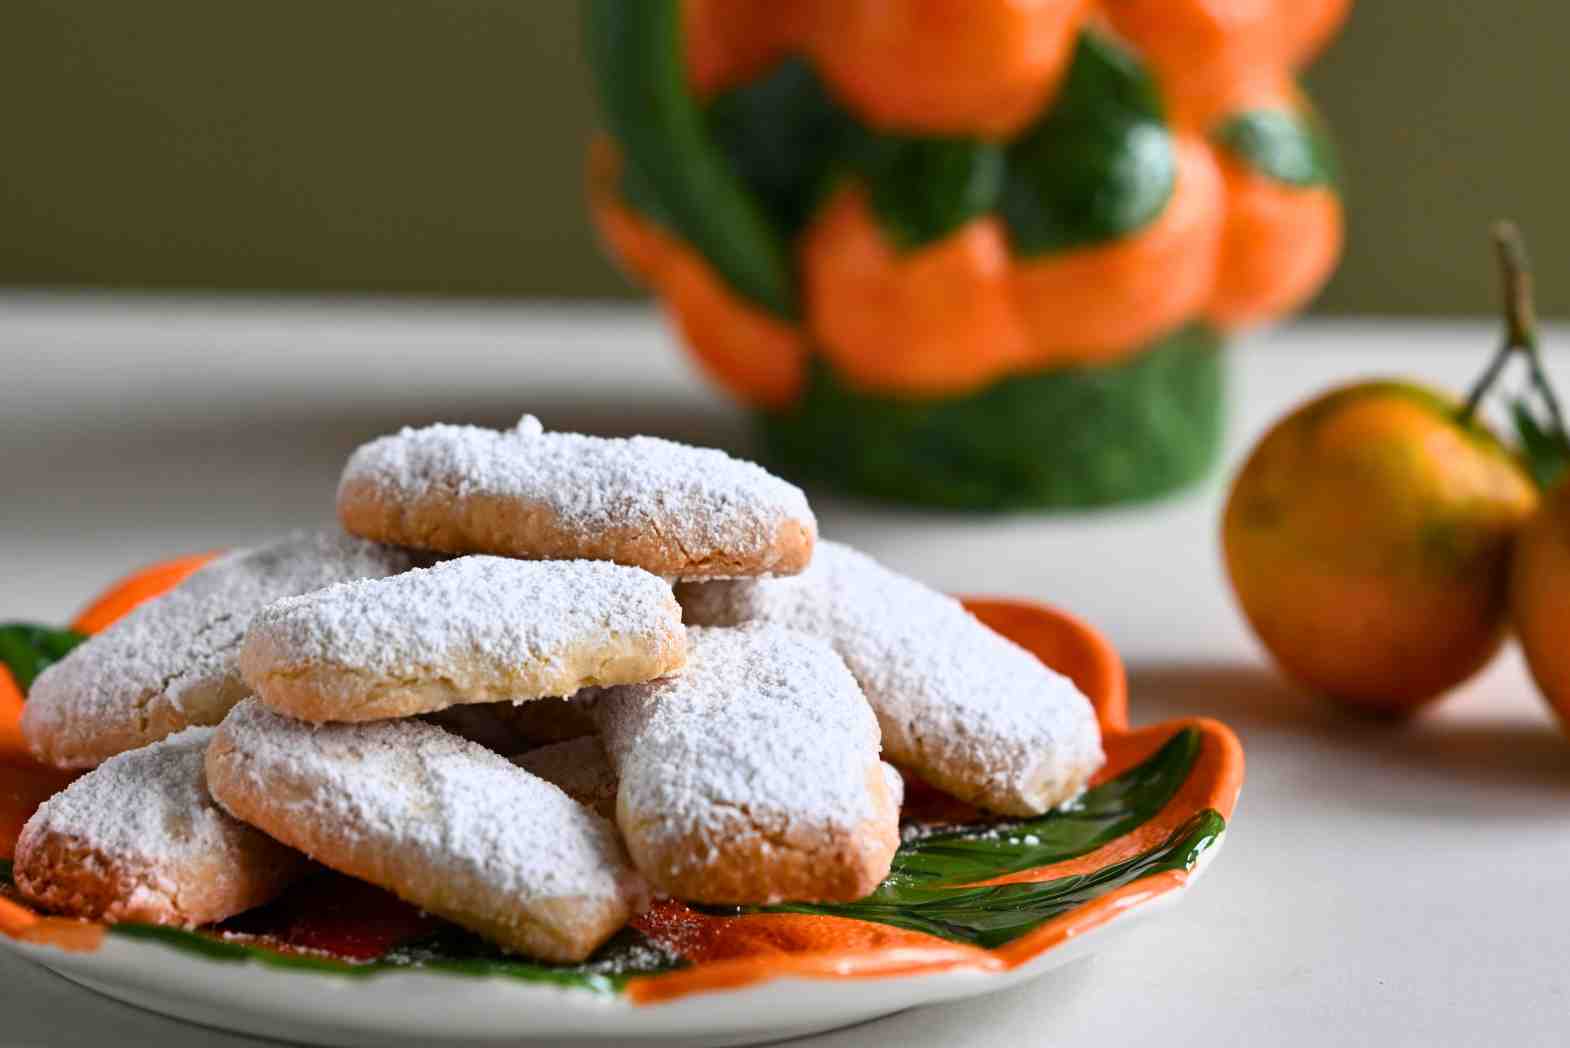 Ricciarelli - Tuscan Soft Almond Sweetmeats